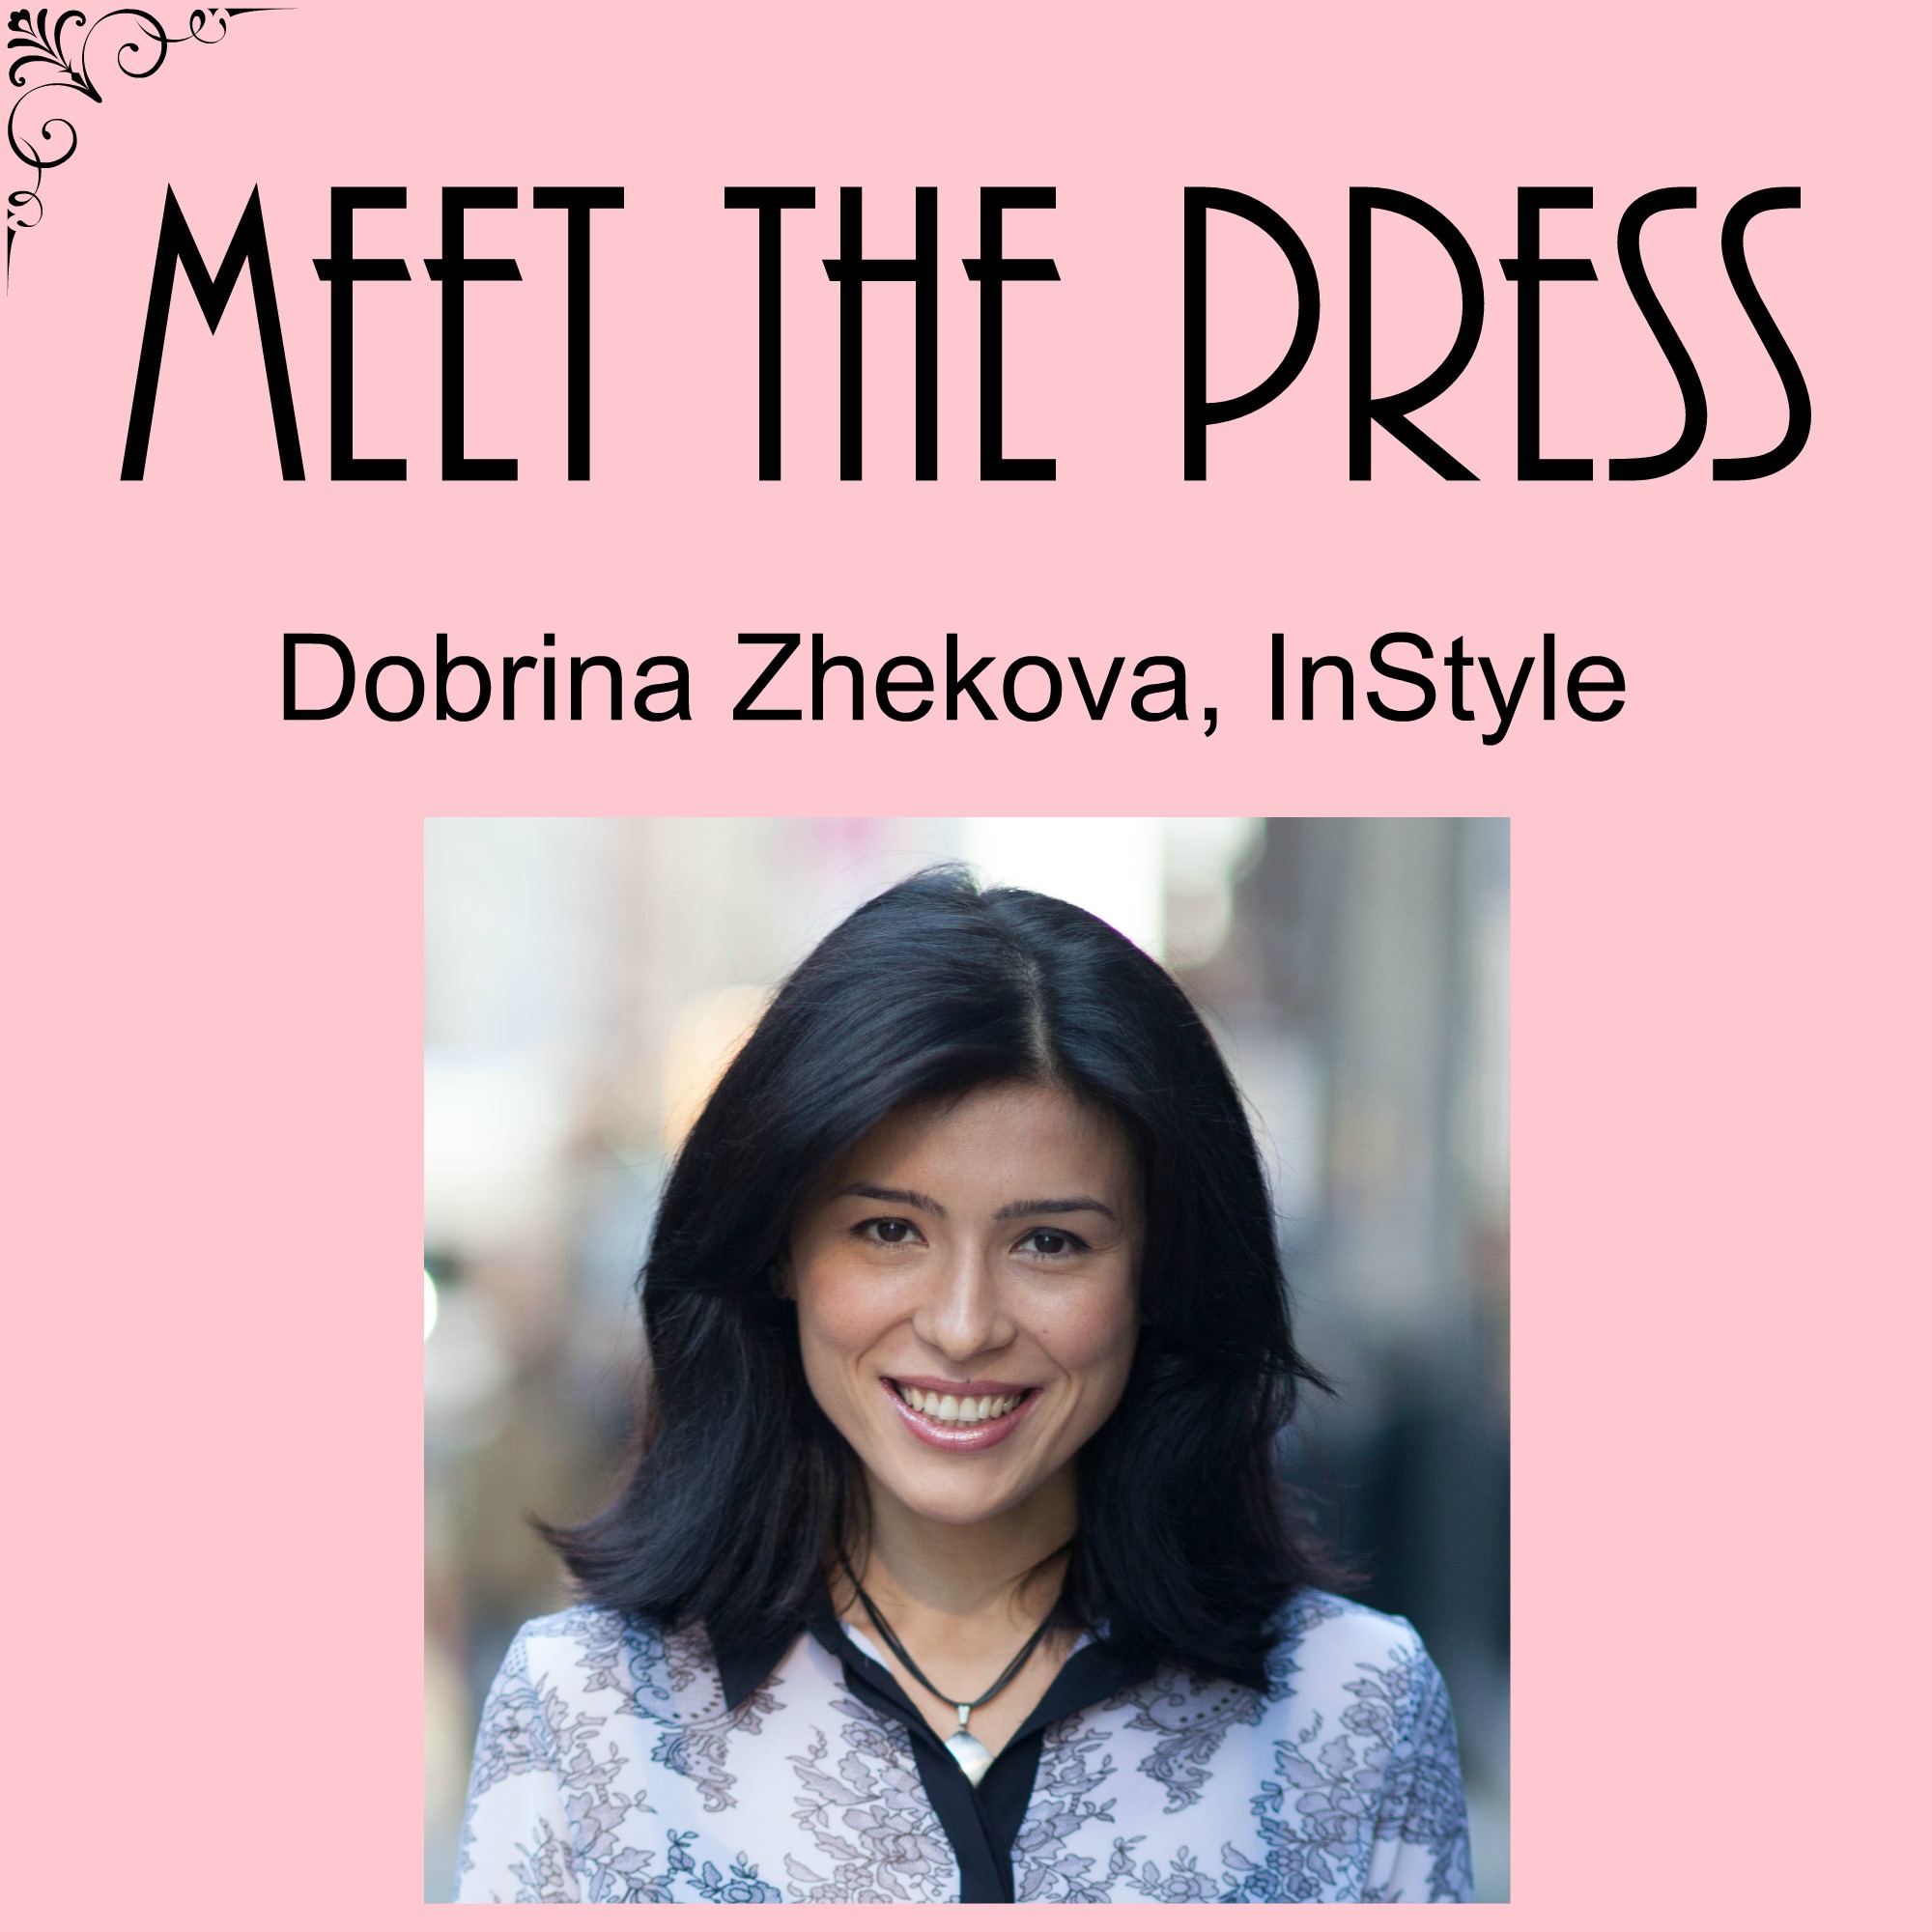 Meet the Press Dobrina Zhekova InStyle